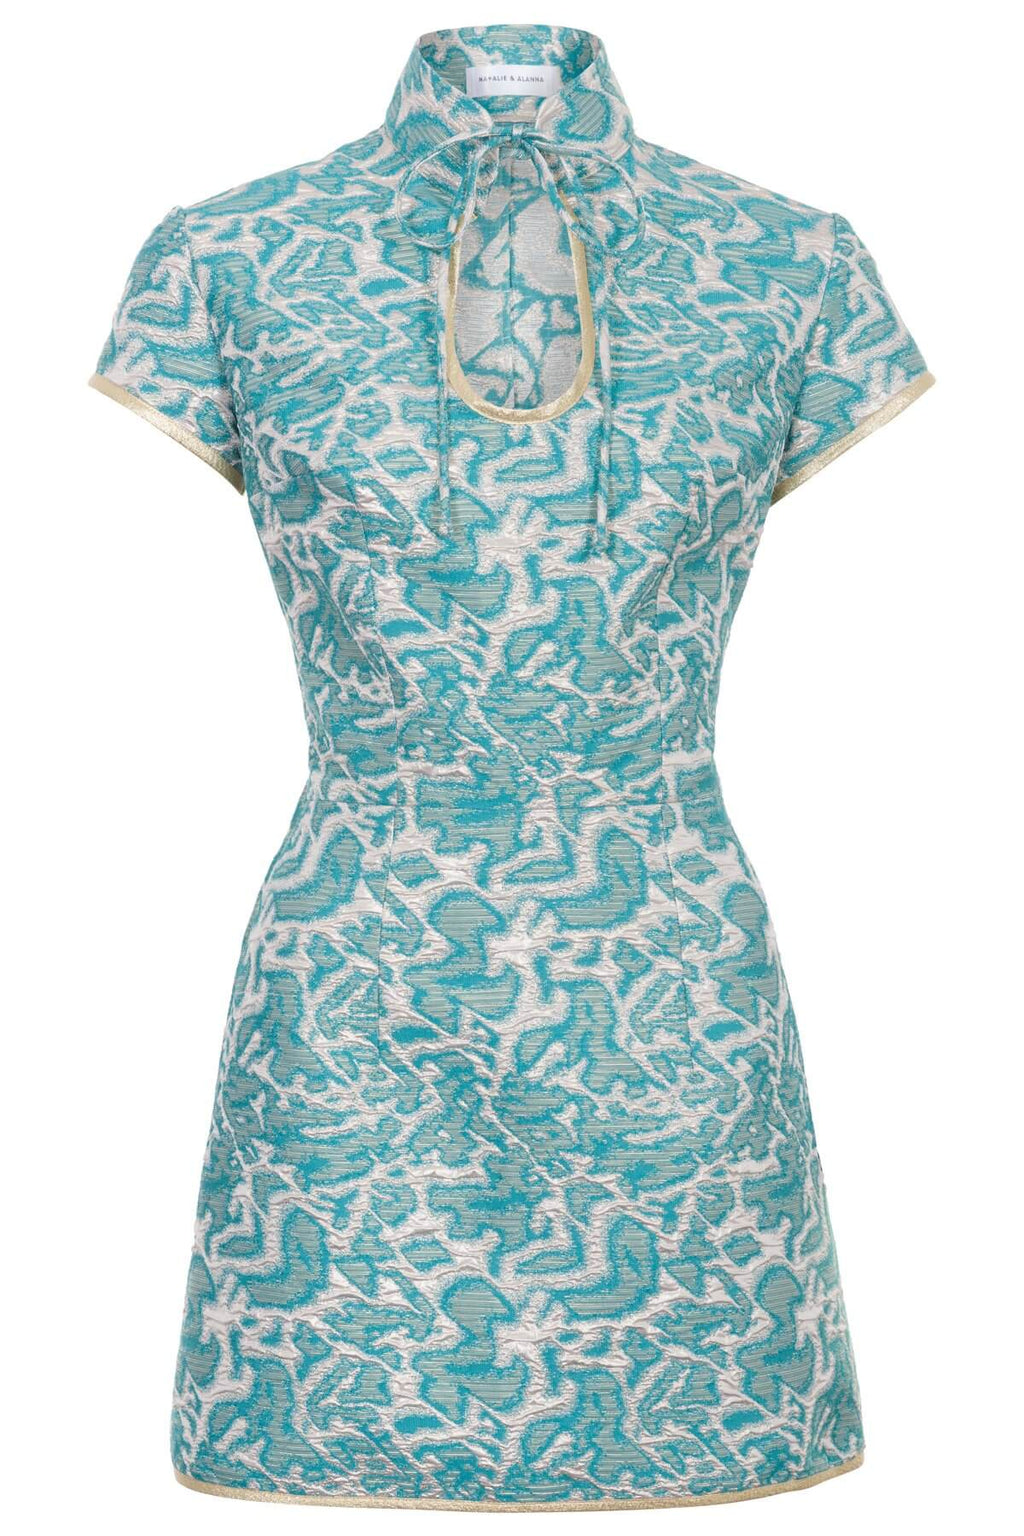 Made to Order Ana Mae Jacquard Mini Dress: Natalie & Alanna - Women's Clothing & Accesssories